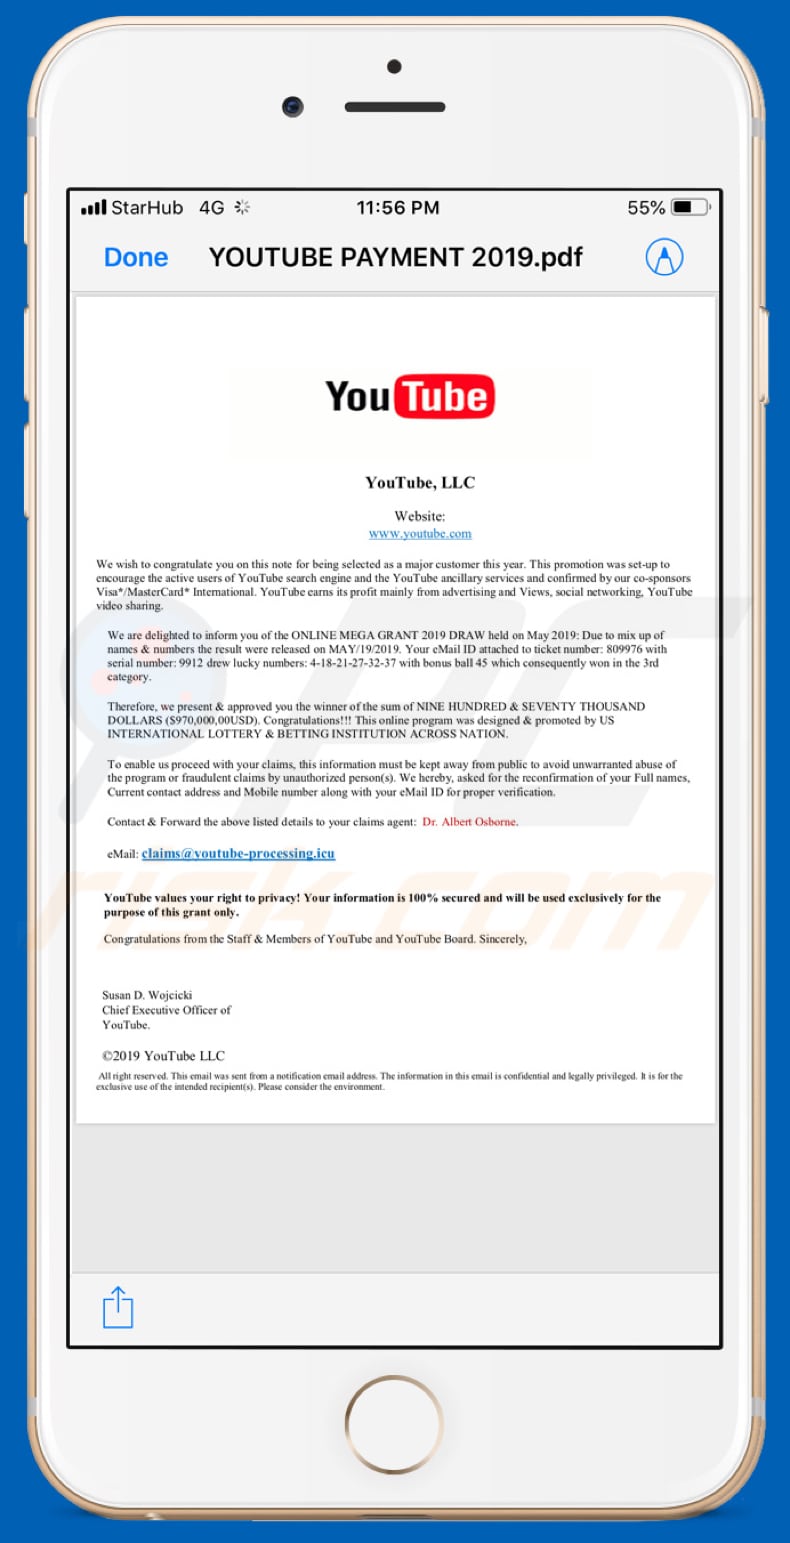 anexo no email da fraude youtube lotttery